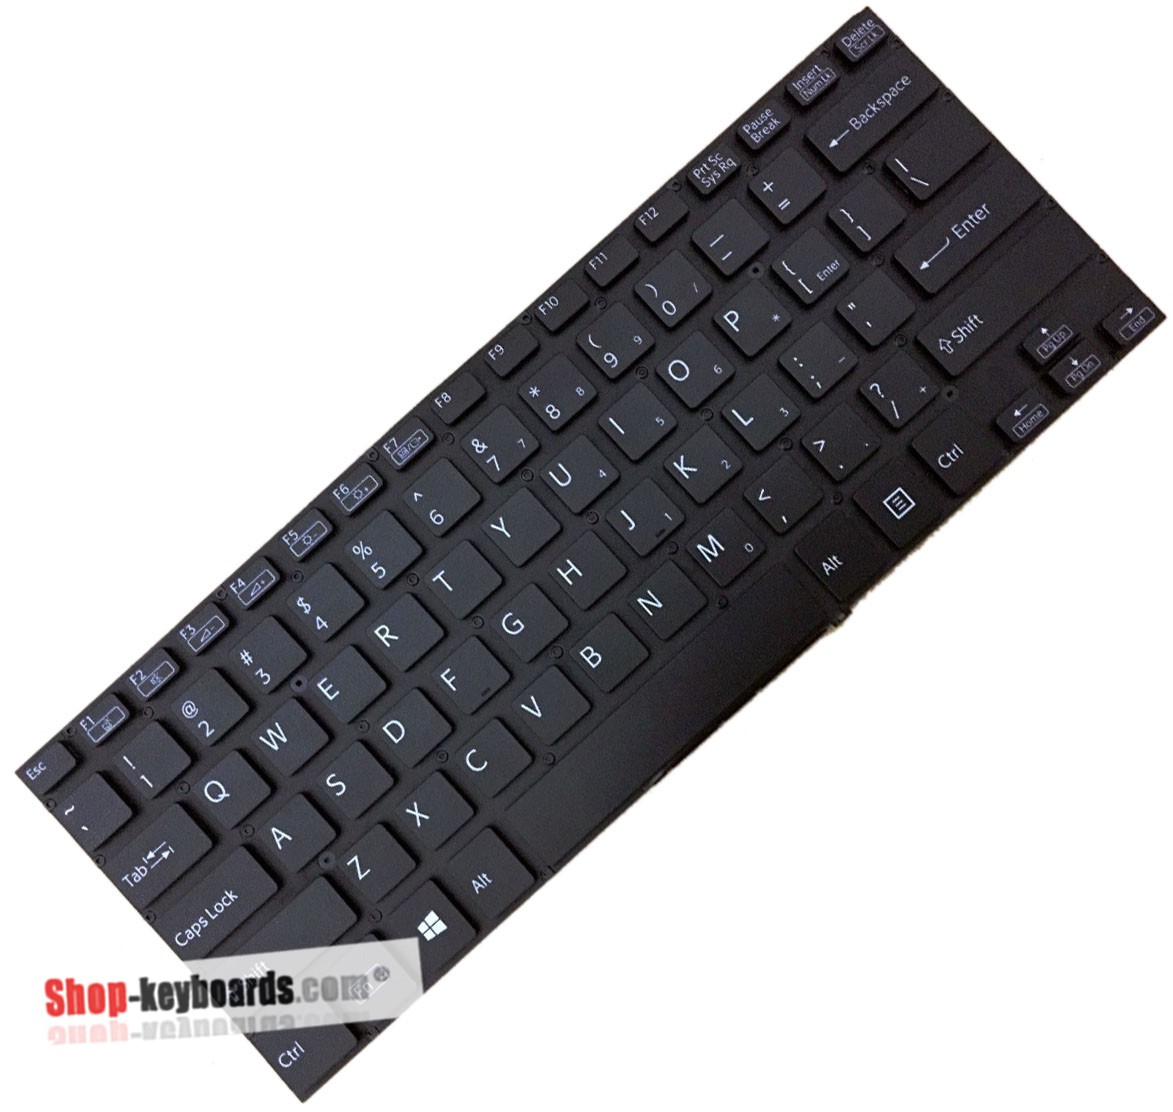 Sony AEHK8U00010 Keyboard replacement